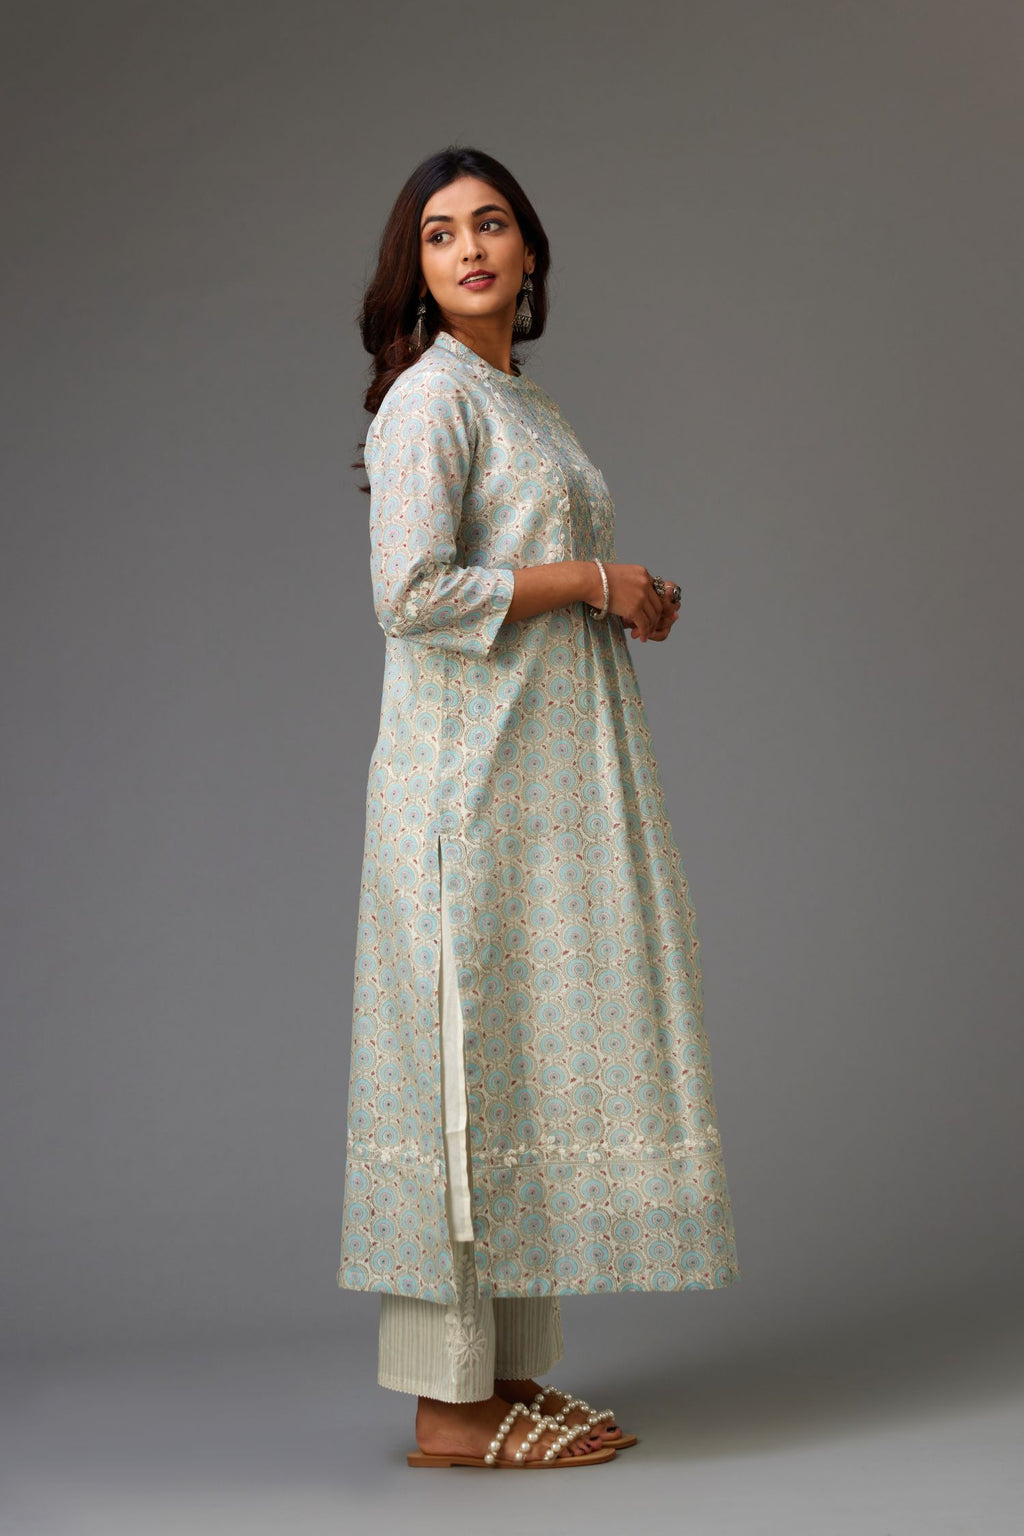 Silk chanderi blue and grey hand block printed straight kurta set highlighted with pin tucks at yoke.